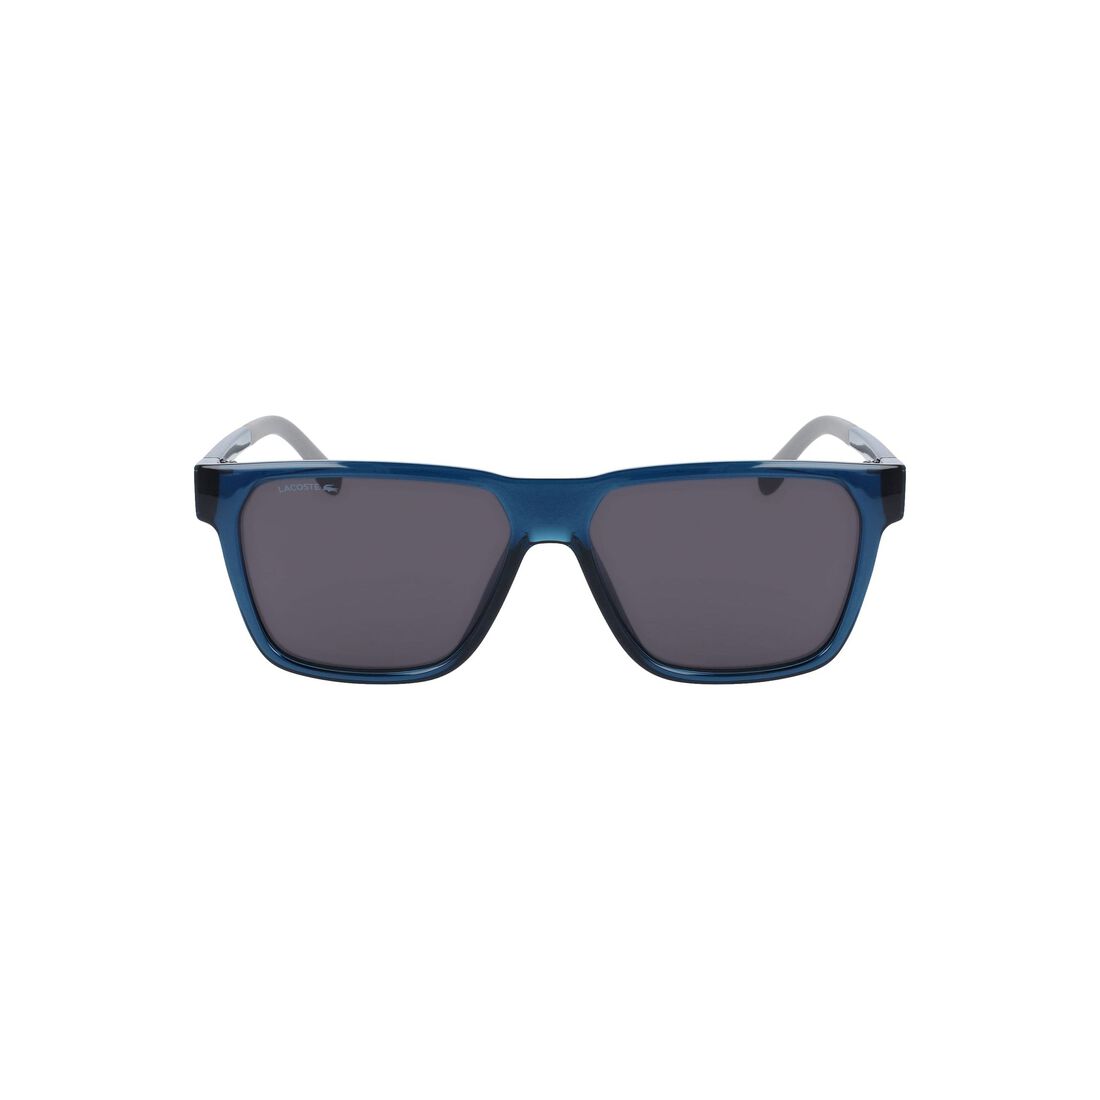 Lacoste Injected Sonnenbrille Herren Blau | URLG-16734